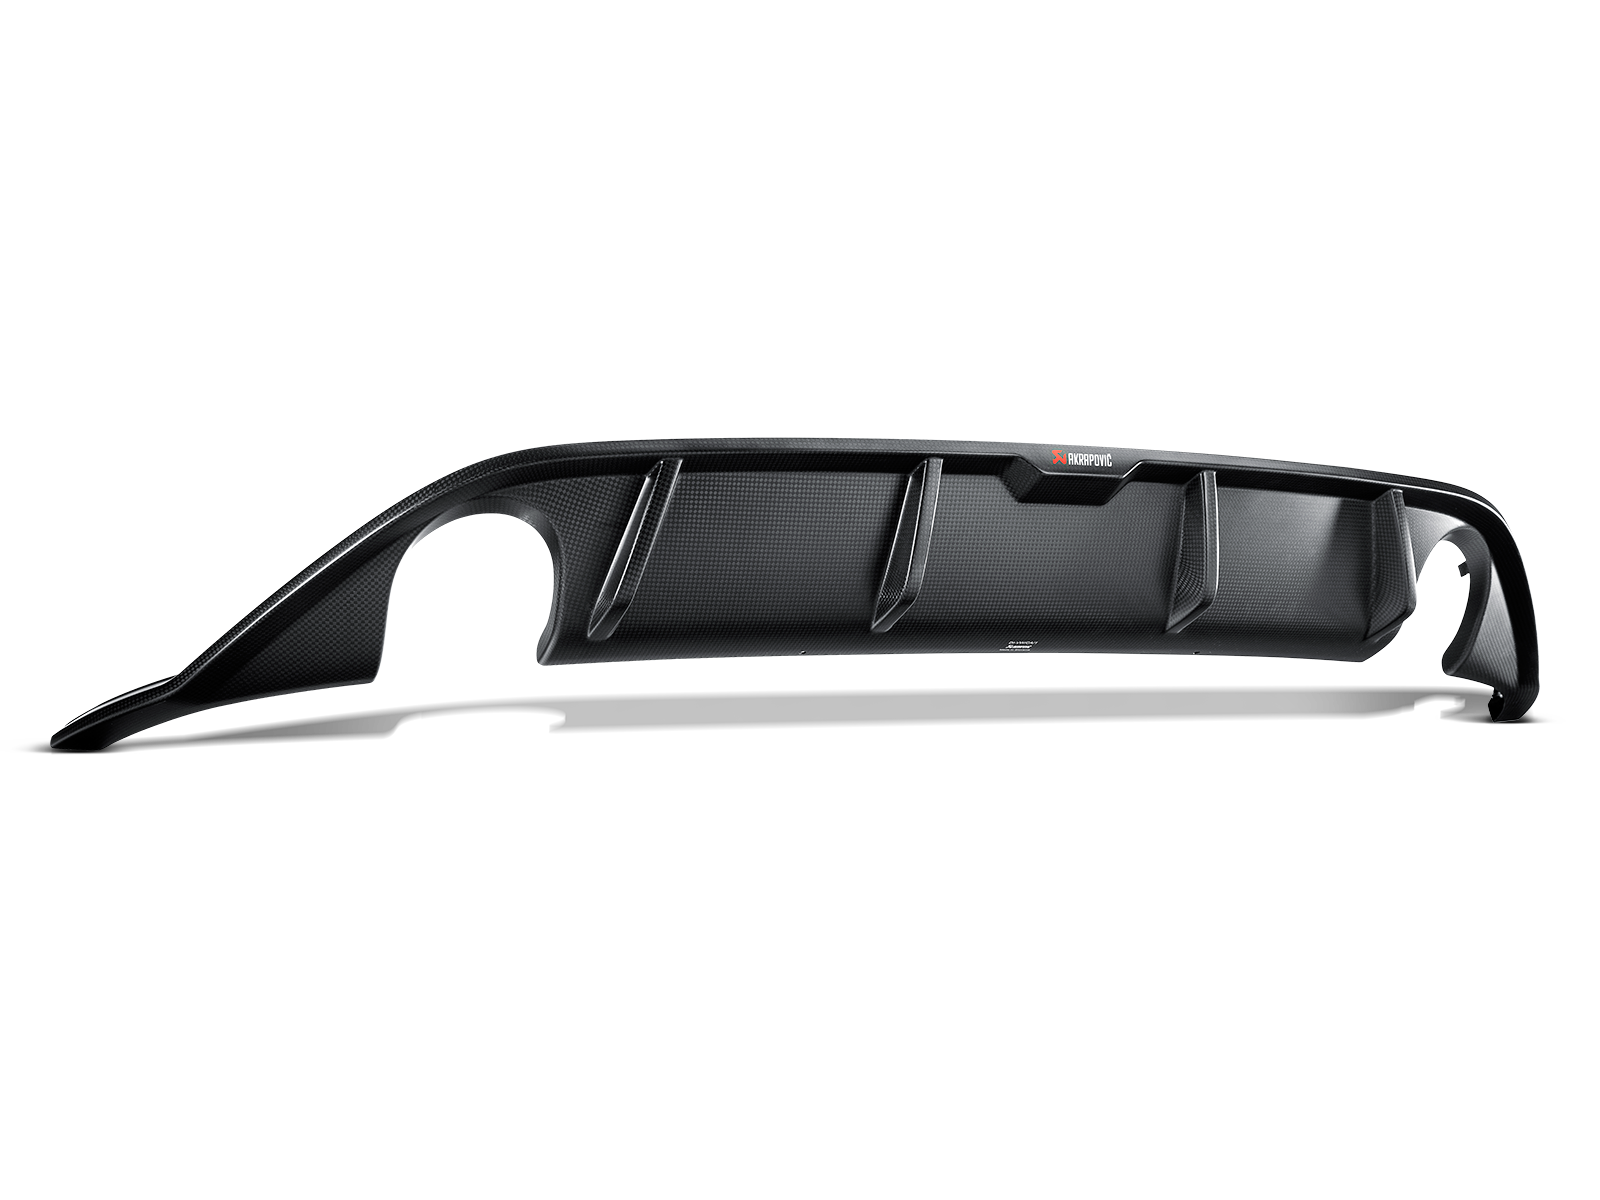 Akrapovic Carbon Heckdiffusor für Volkswagen Golf (VII) GTI 2016